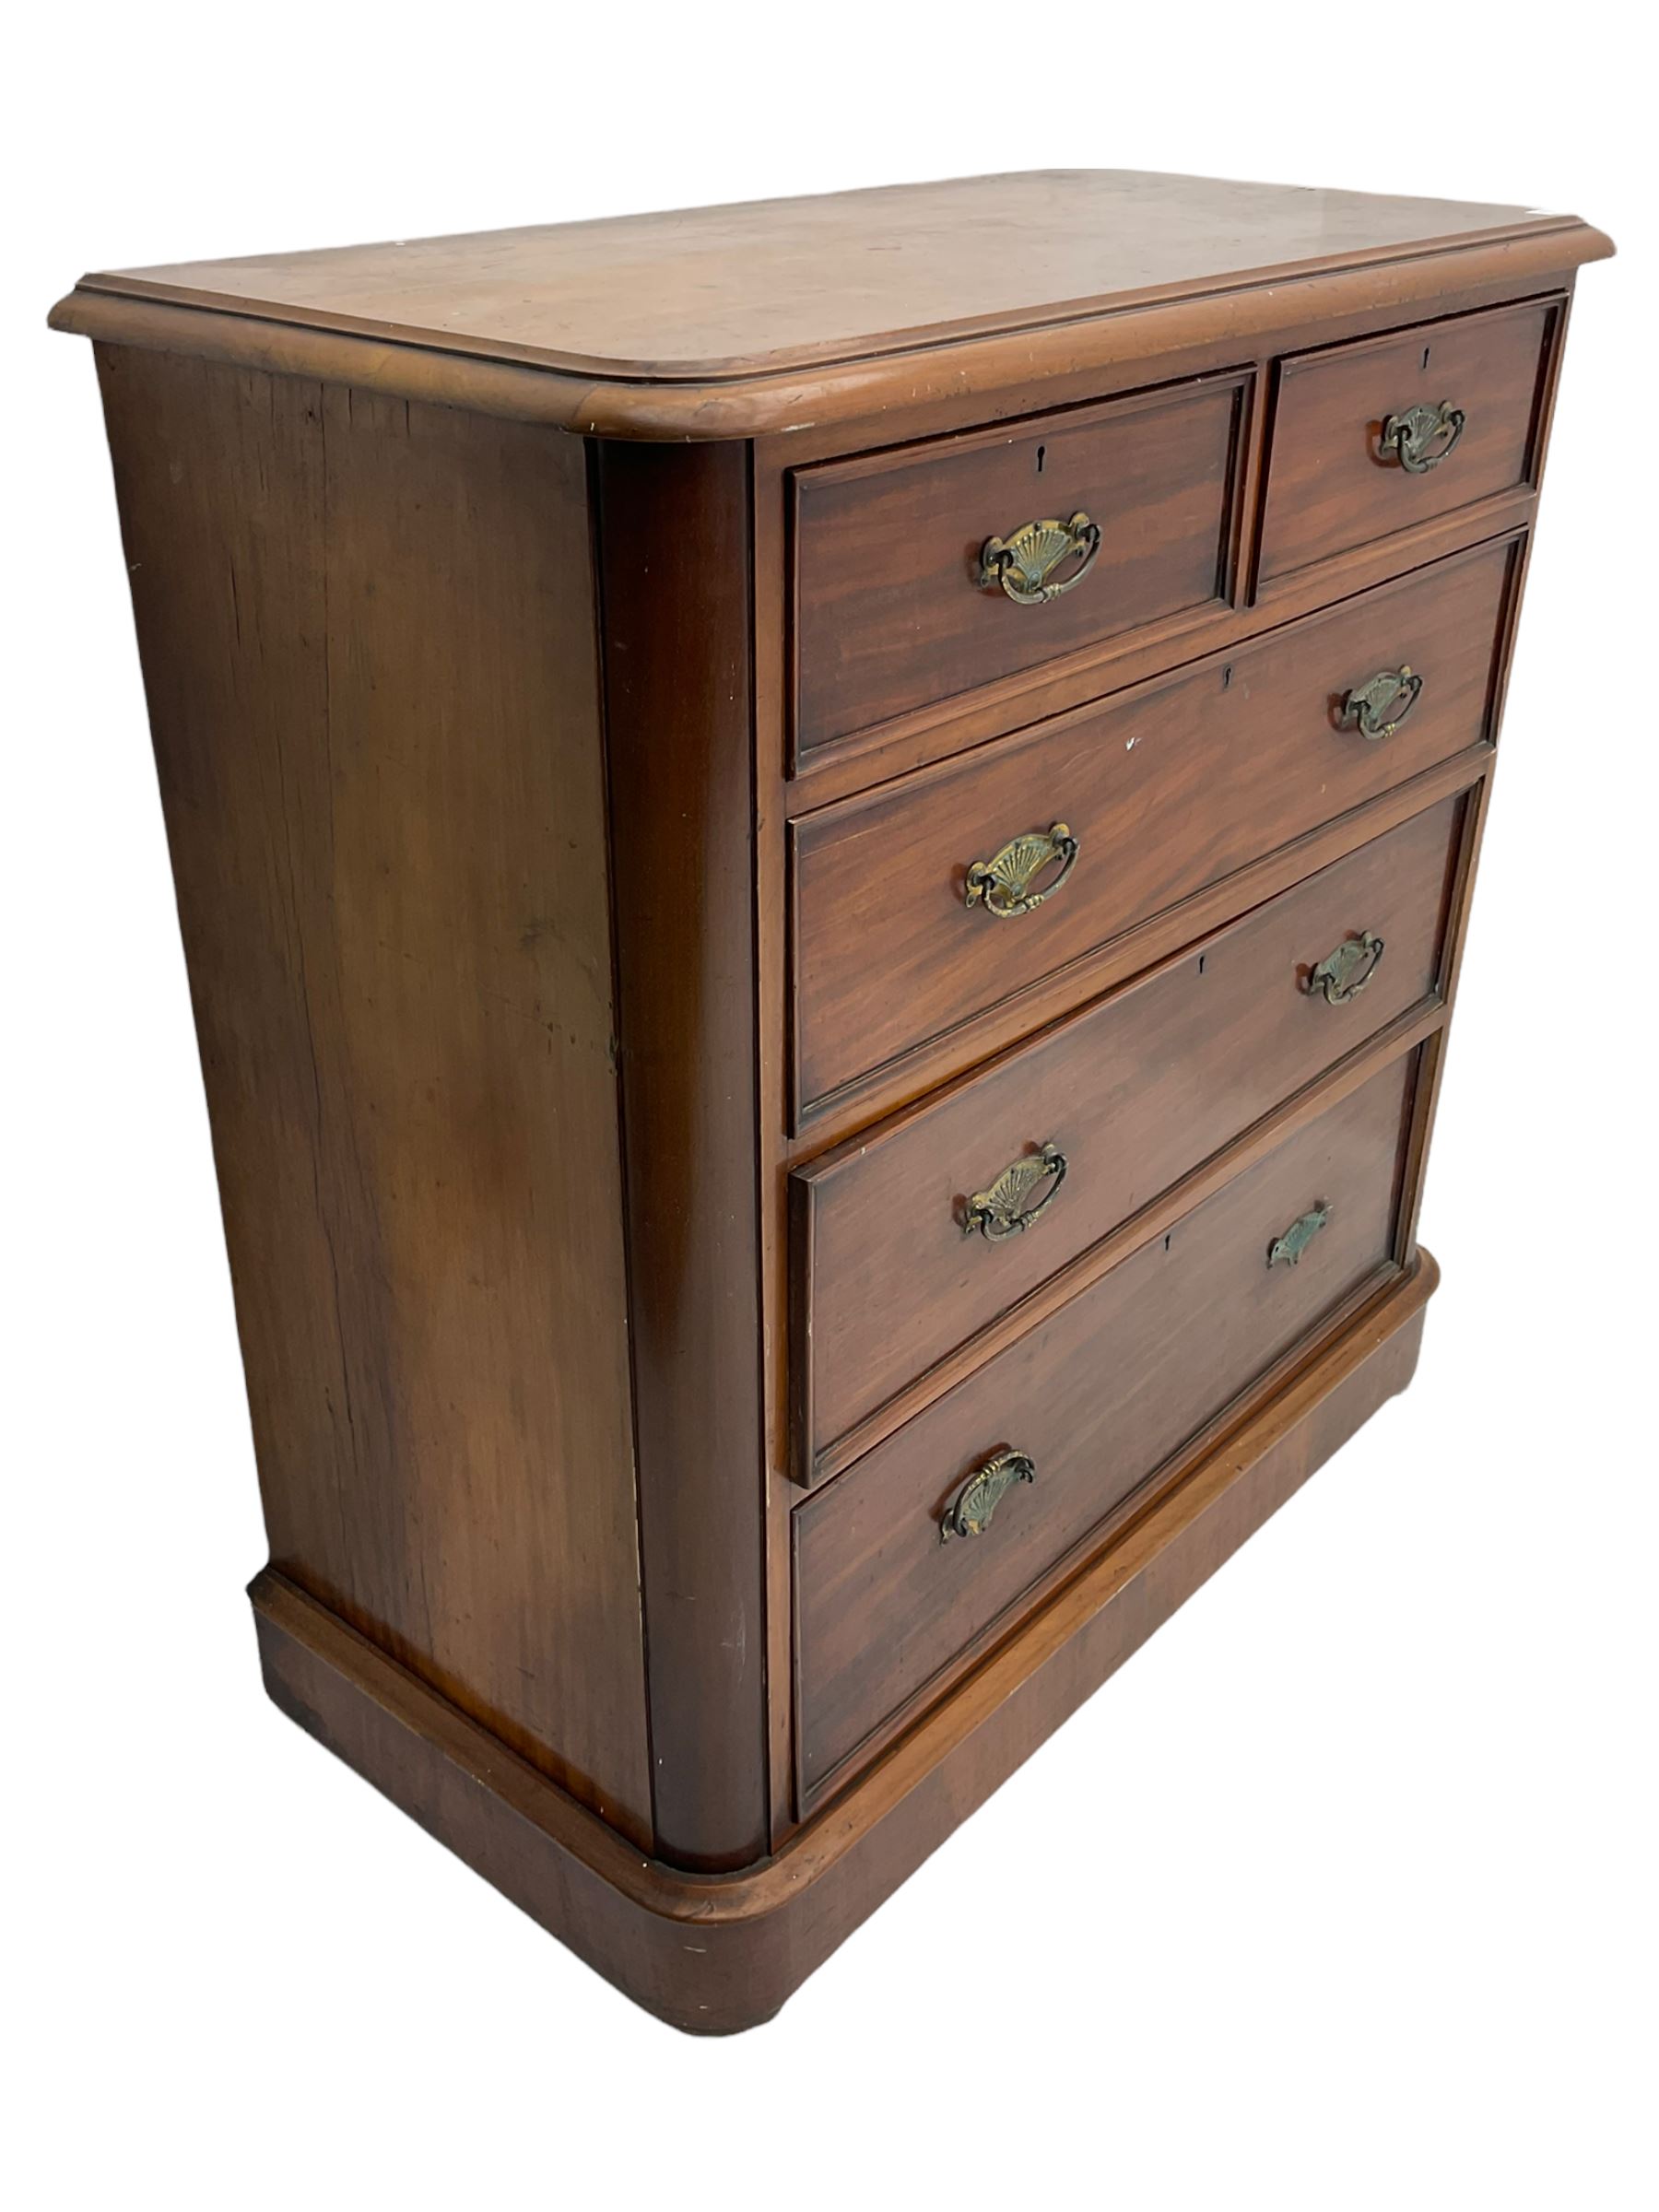 Victorian mahogany chest - Image 2 of 4